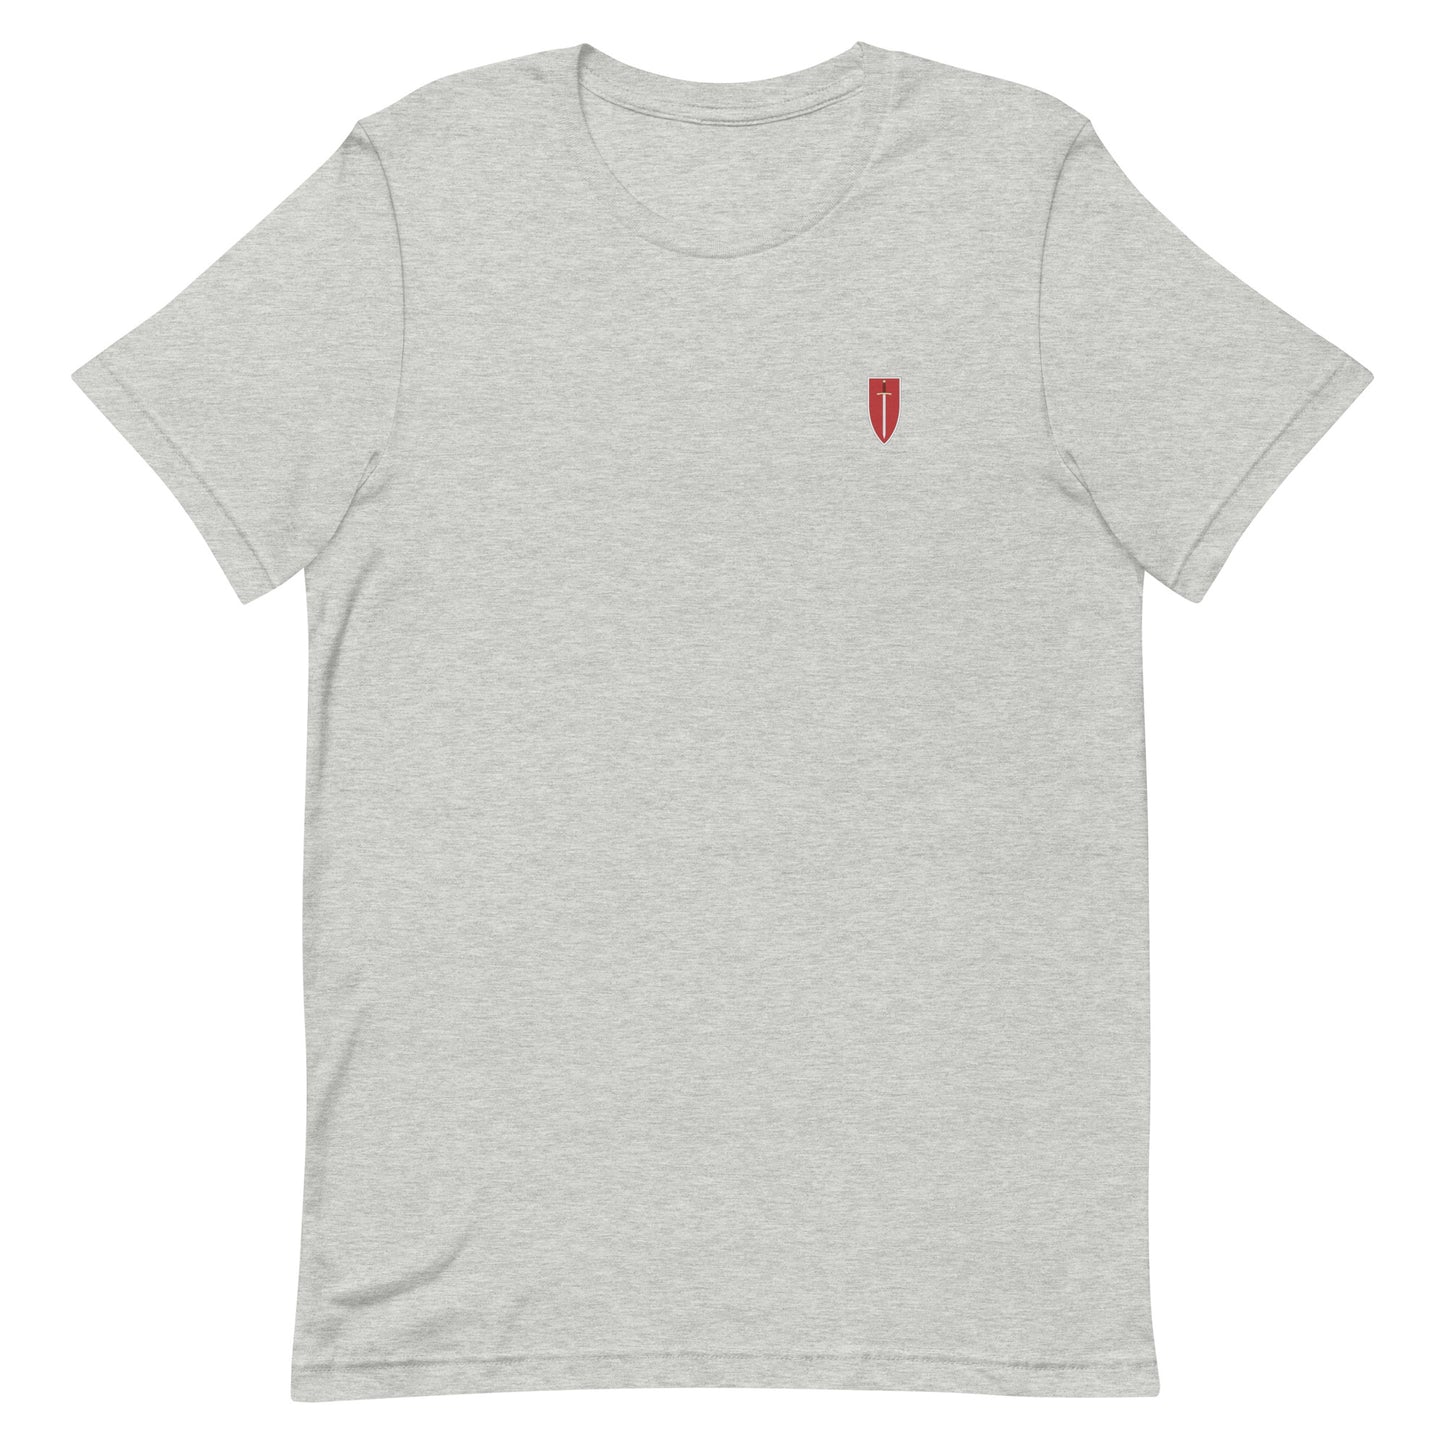 Corinite Sword and Shield, Printed - Sigil Attire - Unisex T-shirt